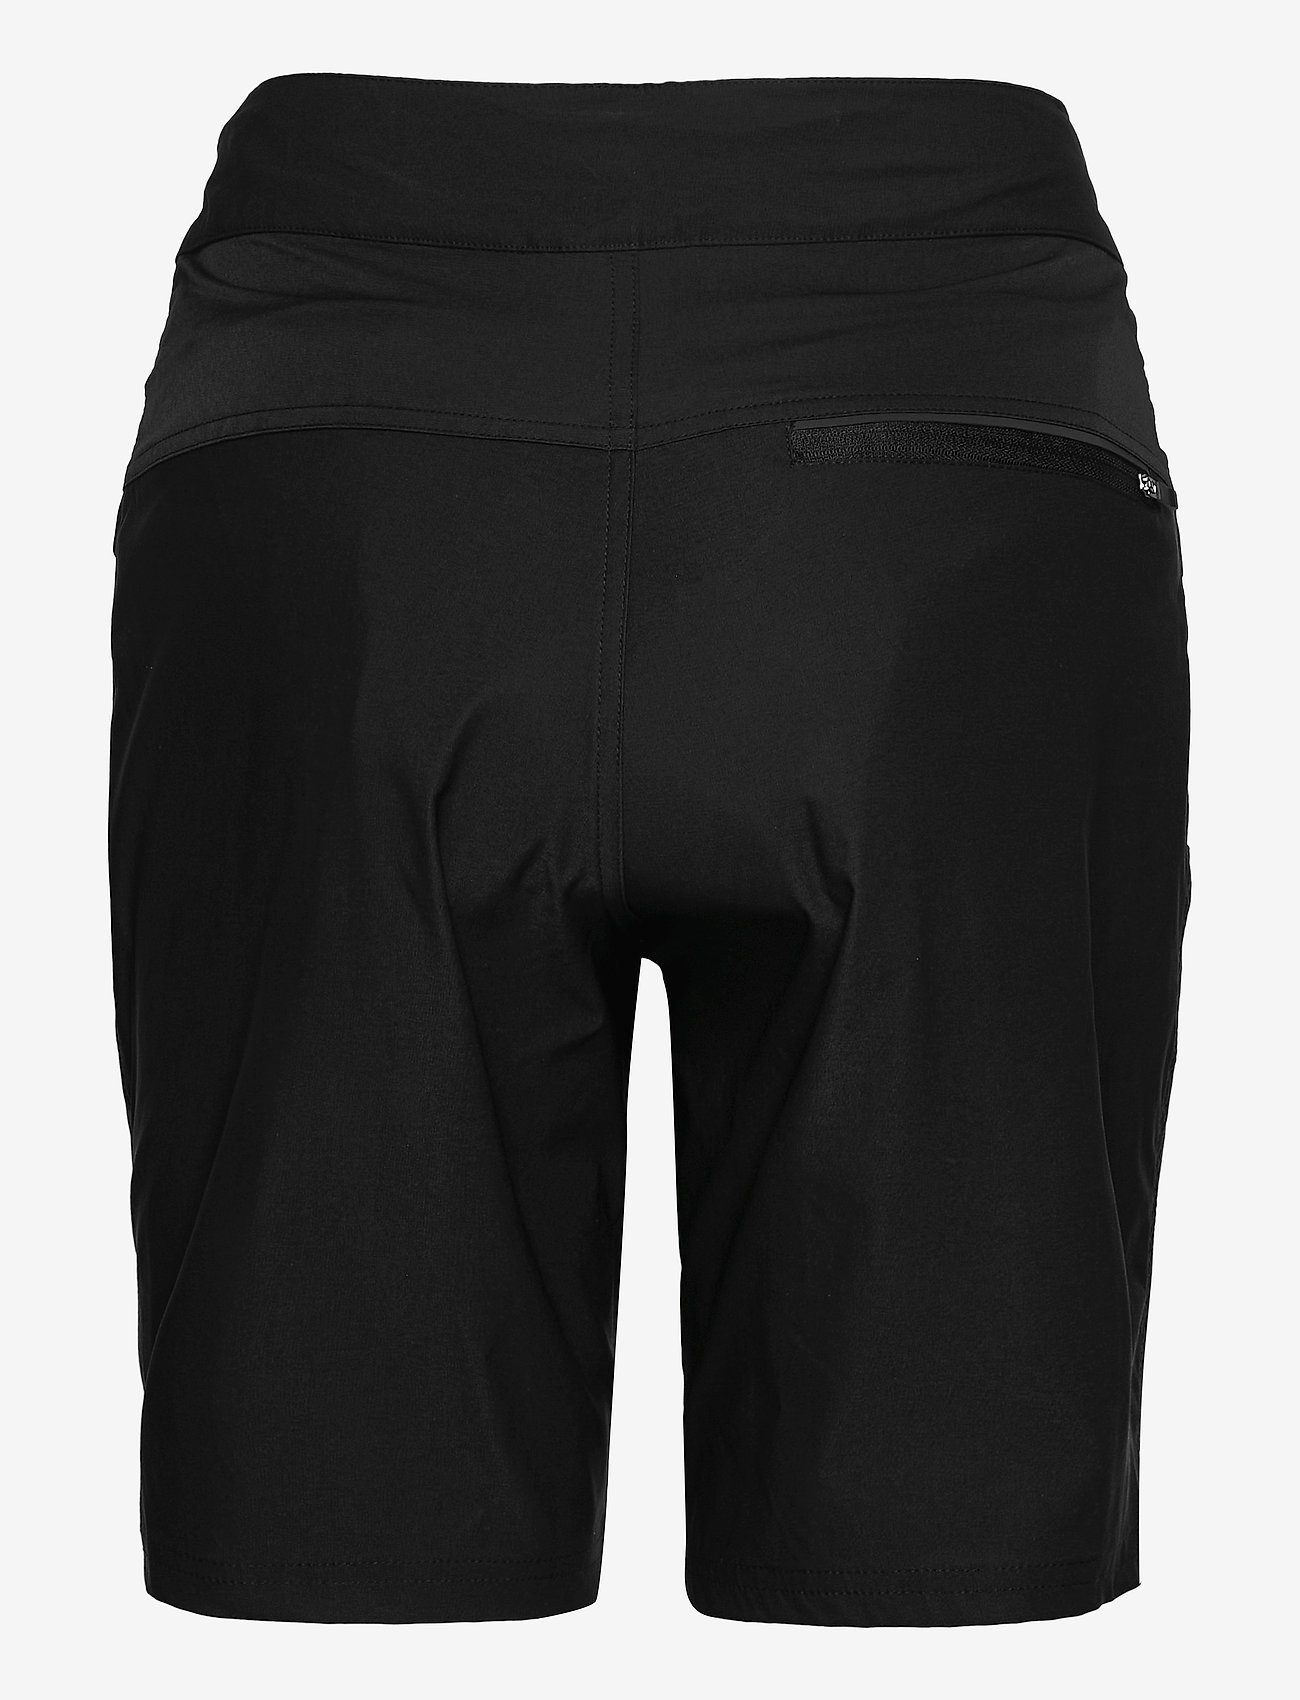 Craft - Core Offroad Xt Shorts W Pad W - sportshorts - black - 1